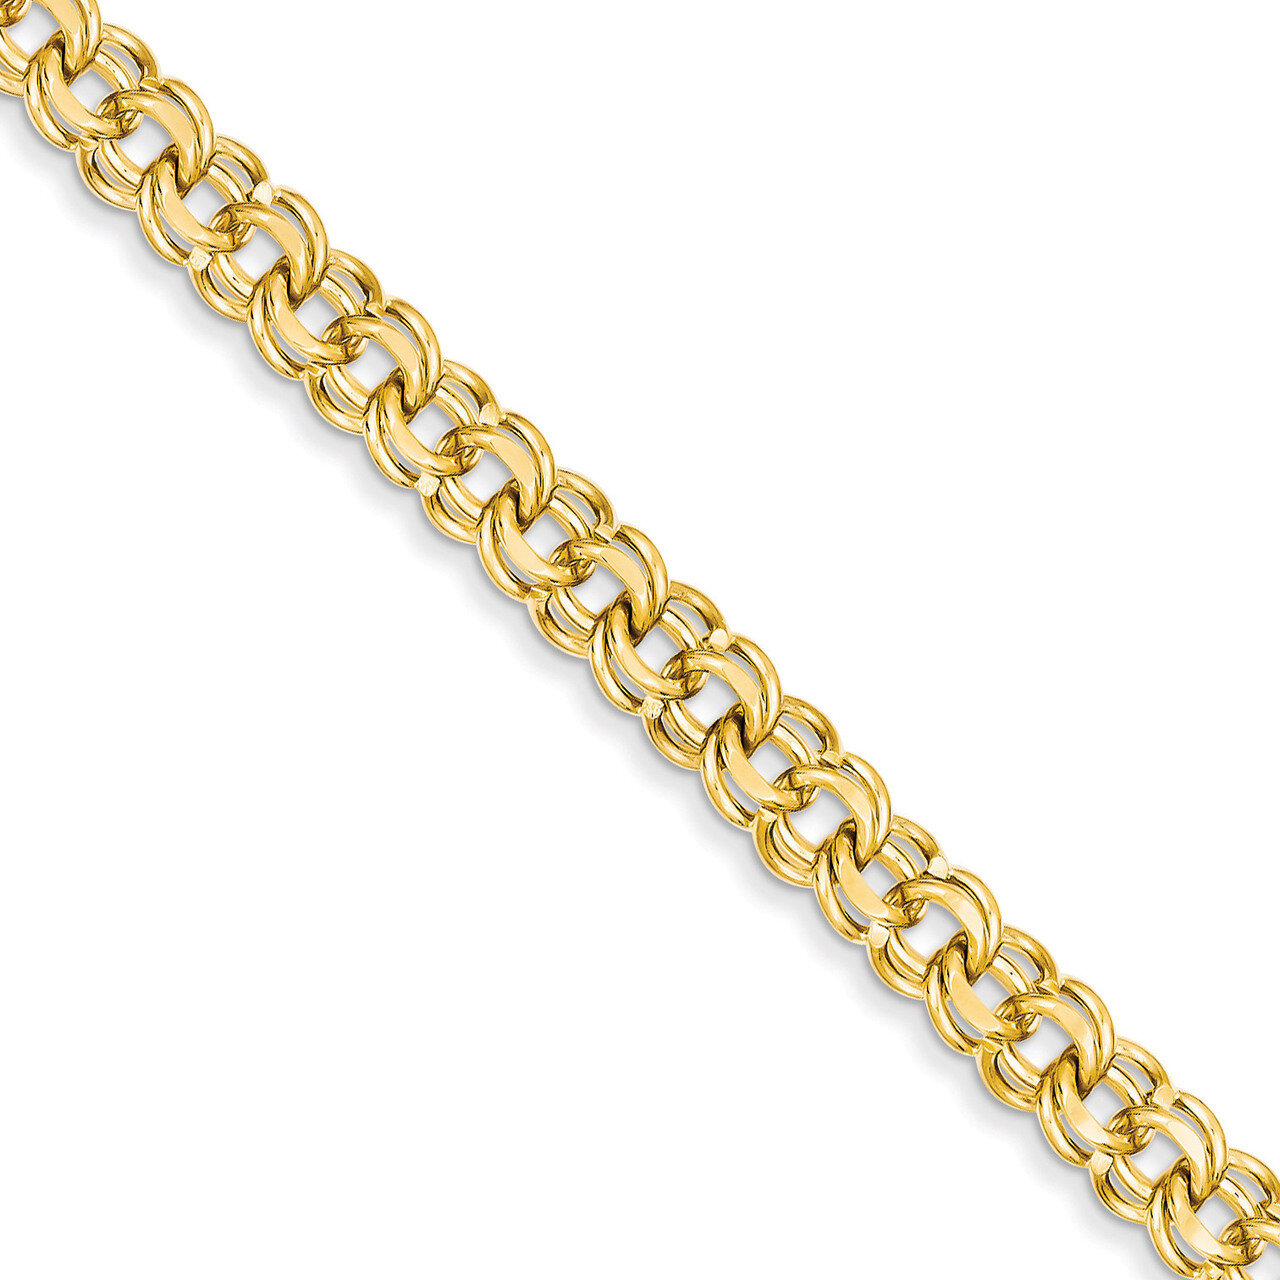 7in 7.5mm Solid Double Link Charm Bracelet 7 Inch 14k Gold DOH19-7